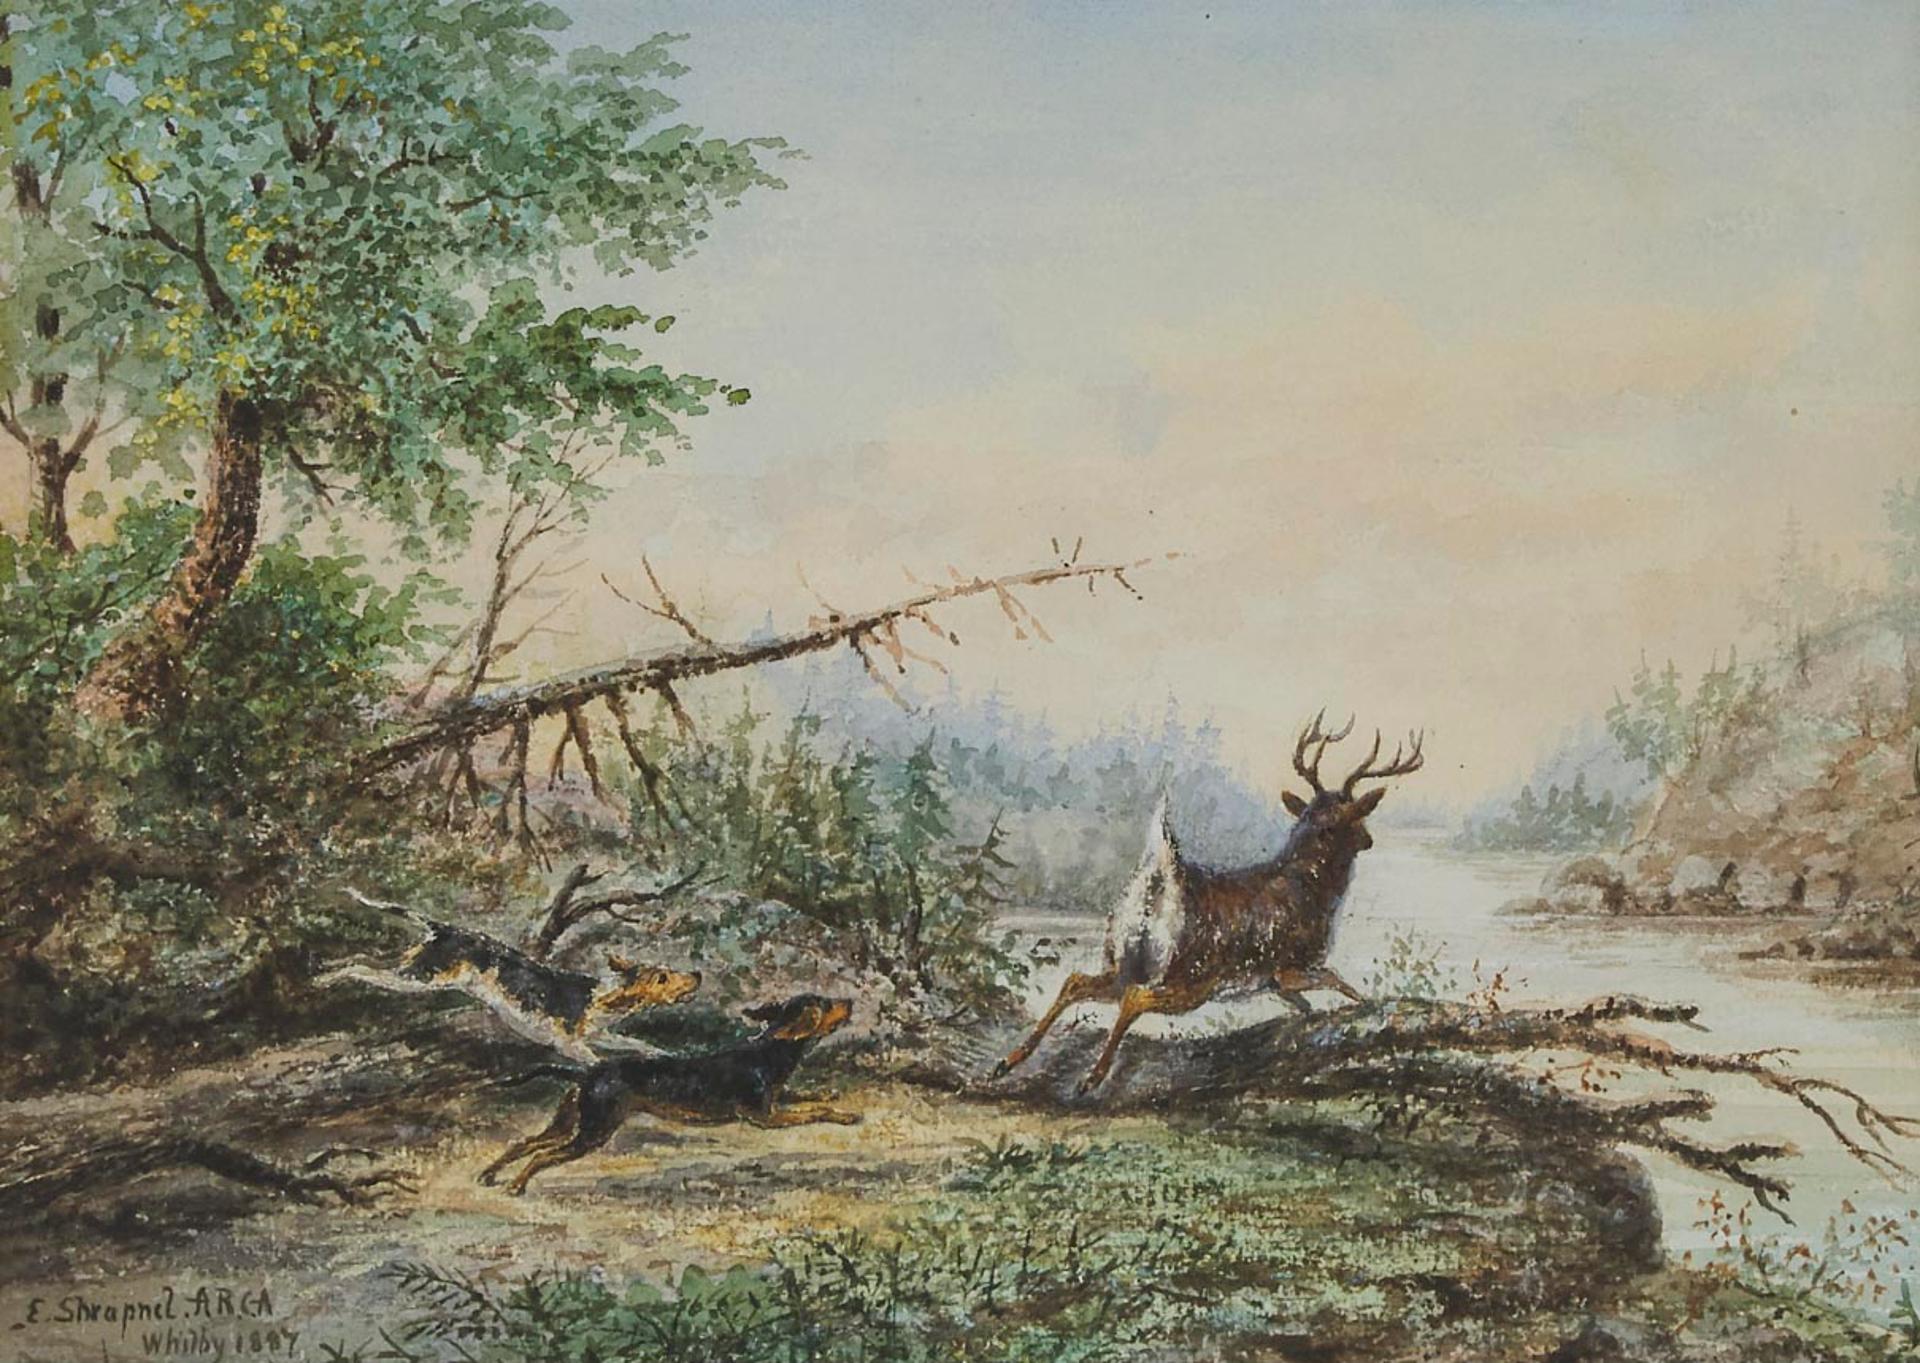 Edward Scrope Shrapnel (1847-1920) - Hunting Dogs Chasing A Deer, 1887